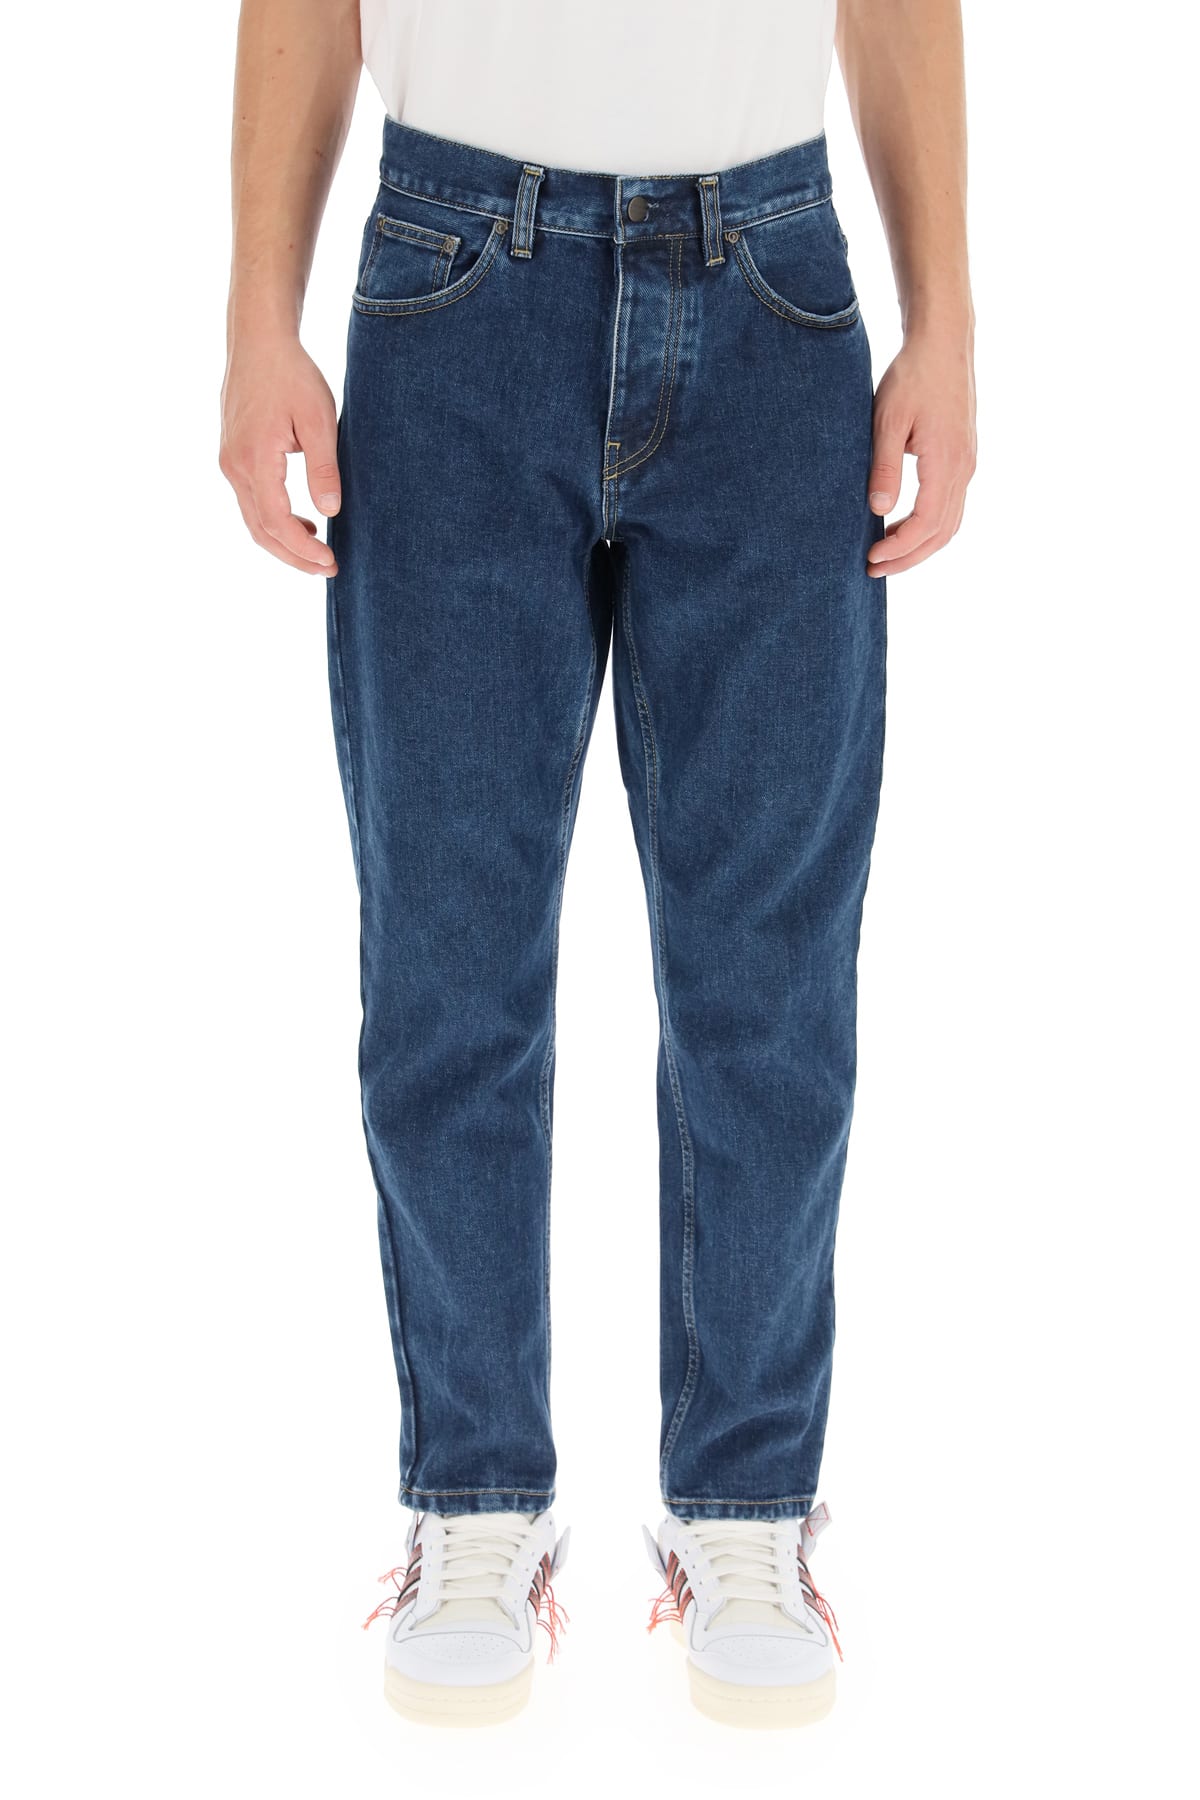 Carhartt Newel Jeans In Organic Cotton